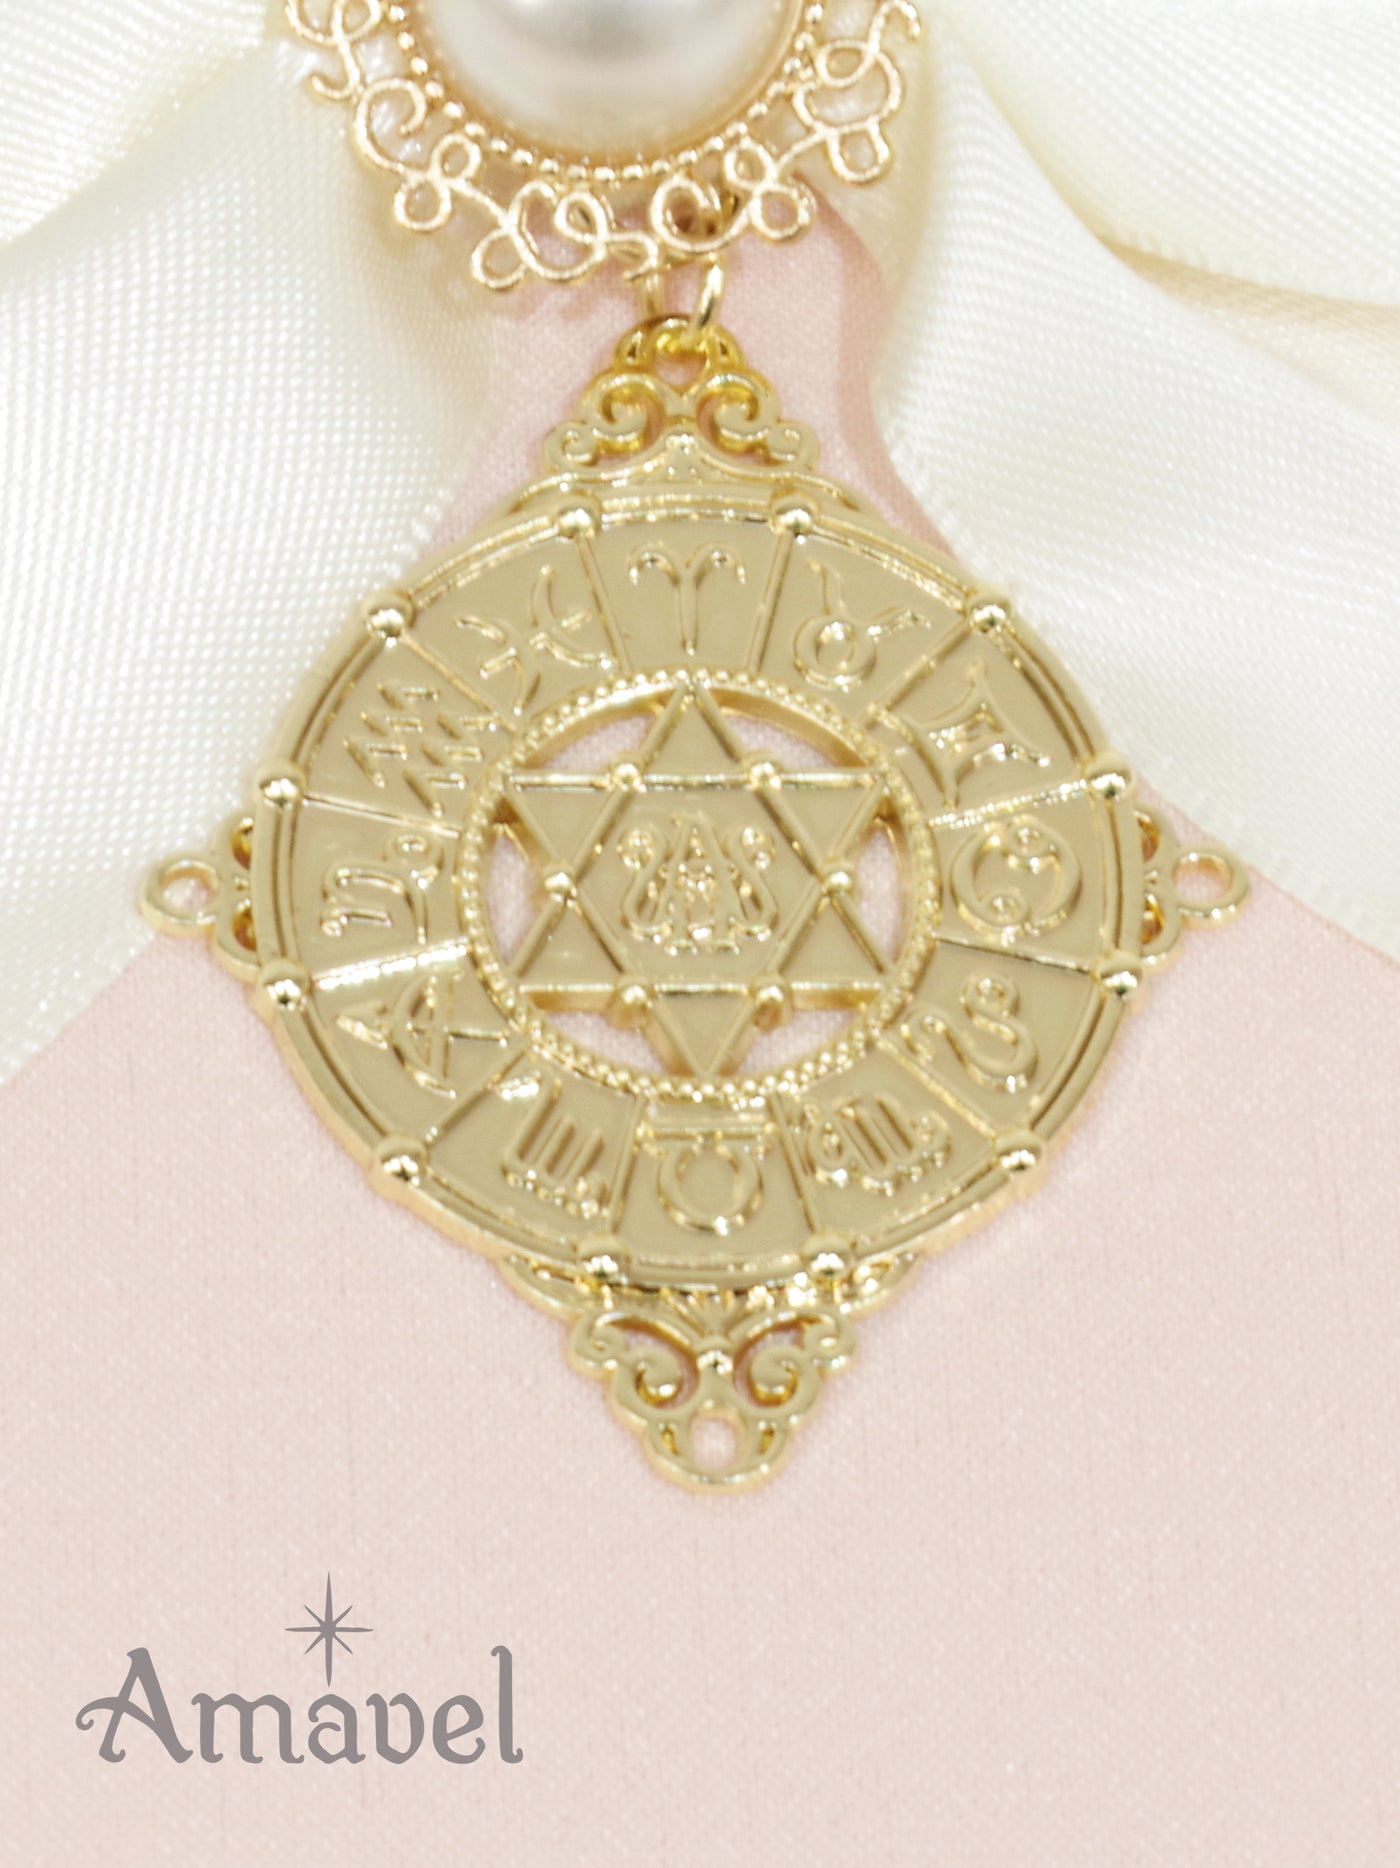 Fortune Horoscope Bag Charm (Virgo, Taurus, Cancer)